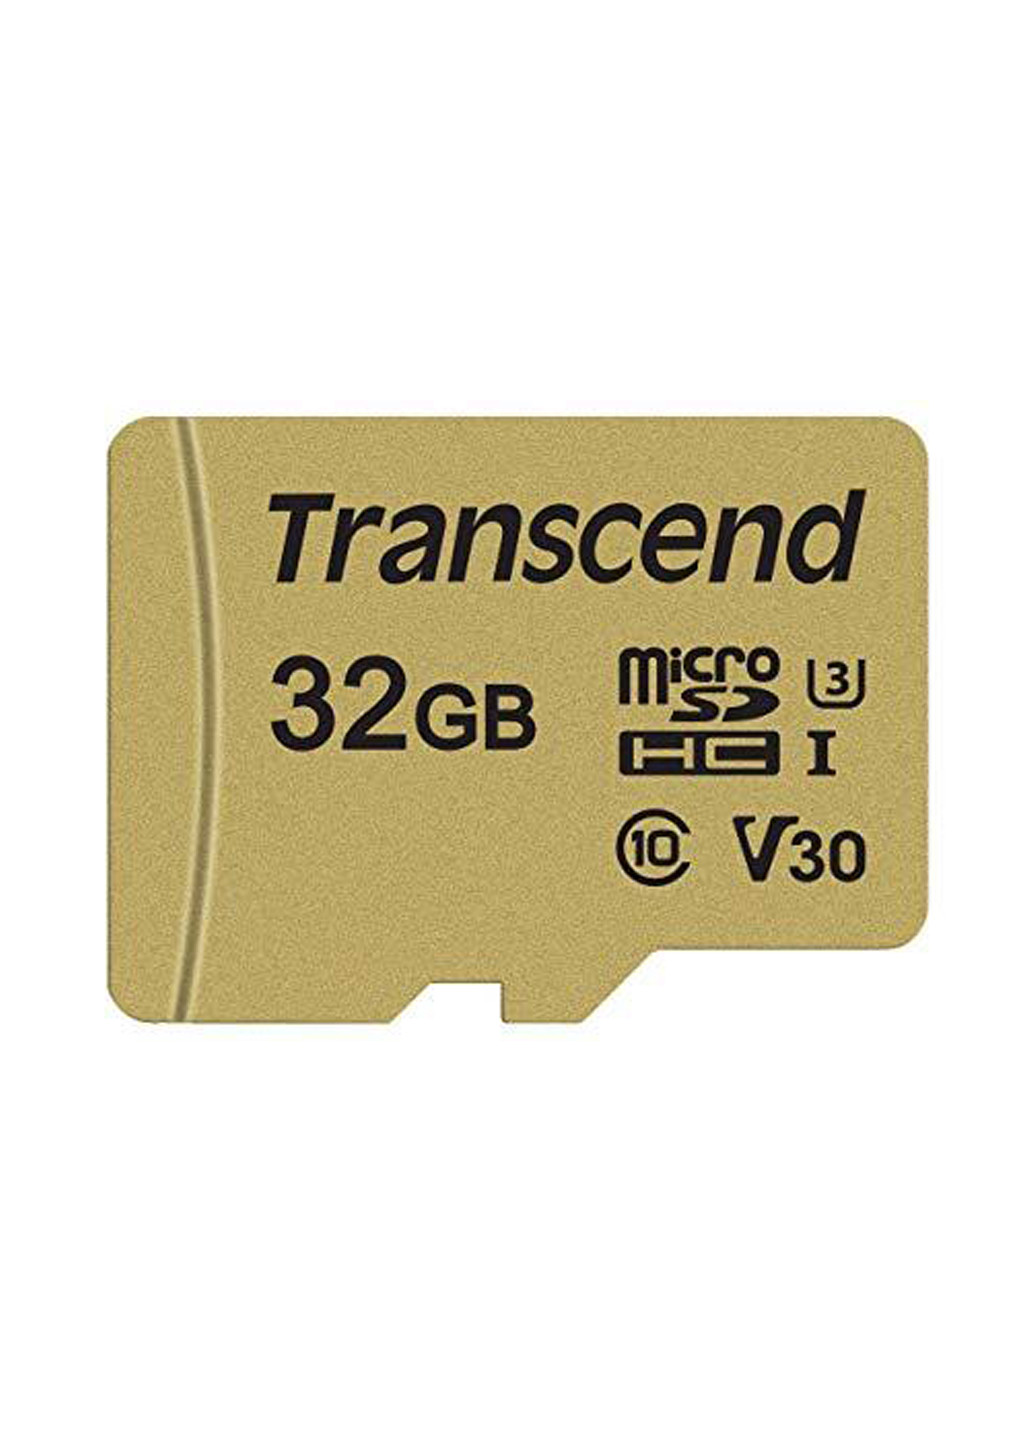 Карта памяти microSDHC 32GB C10 UHS-I U3 (R95/W60MB/s) + SD-adapter (TS32GUSD500S) Transcend карта памяти transcend microsdhc 32gb c10 uhs-i u3 (r95/w60mb/s) + sd-adapter (ts32gusd500s) (130843196)